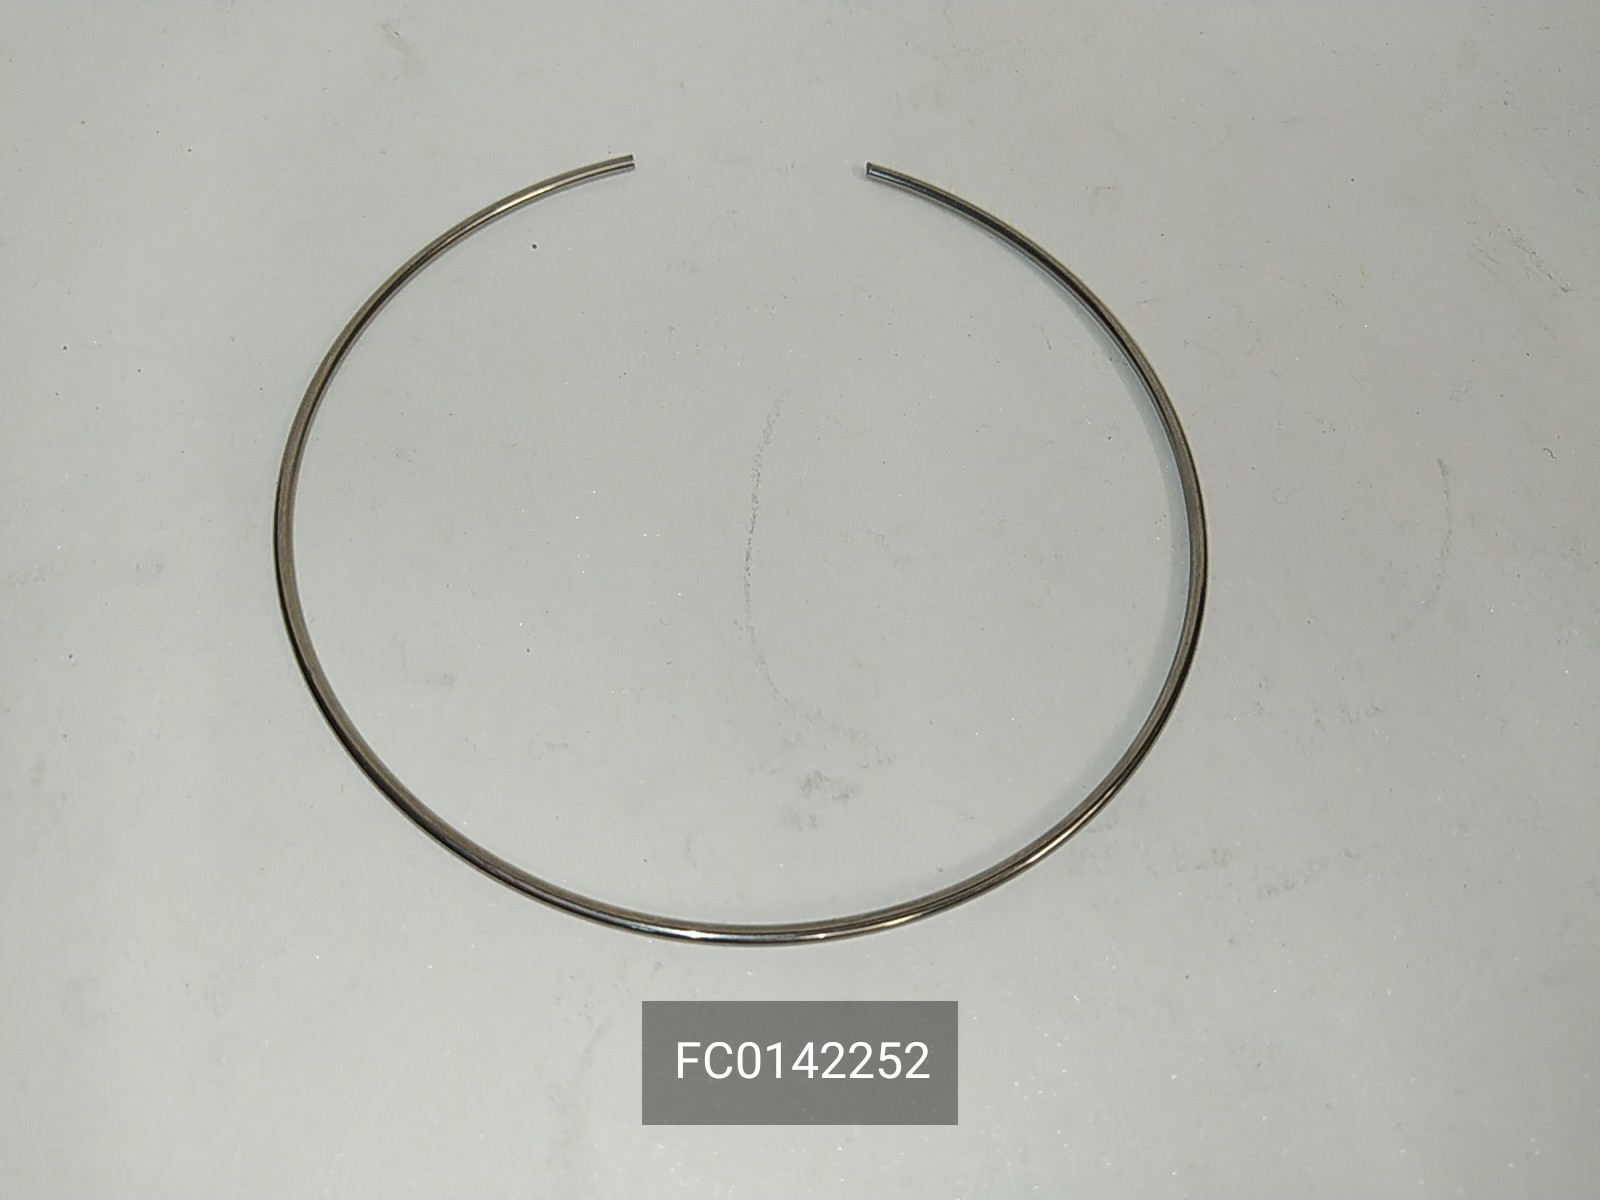 Кольцо, FAW, стопорное топливной горловины, FC0142252.